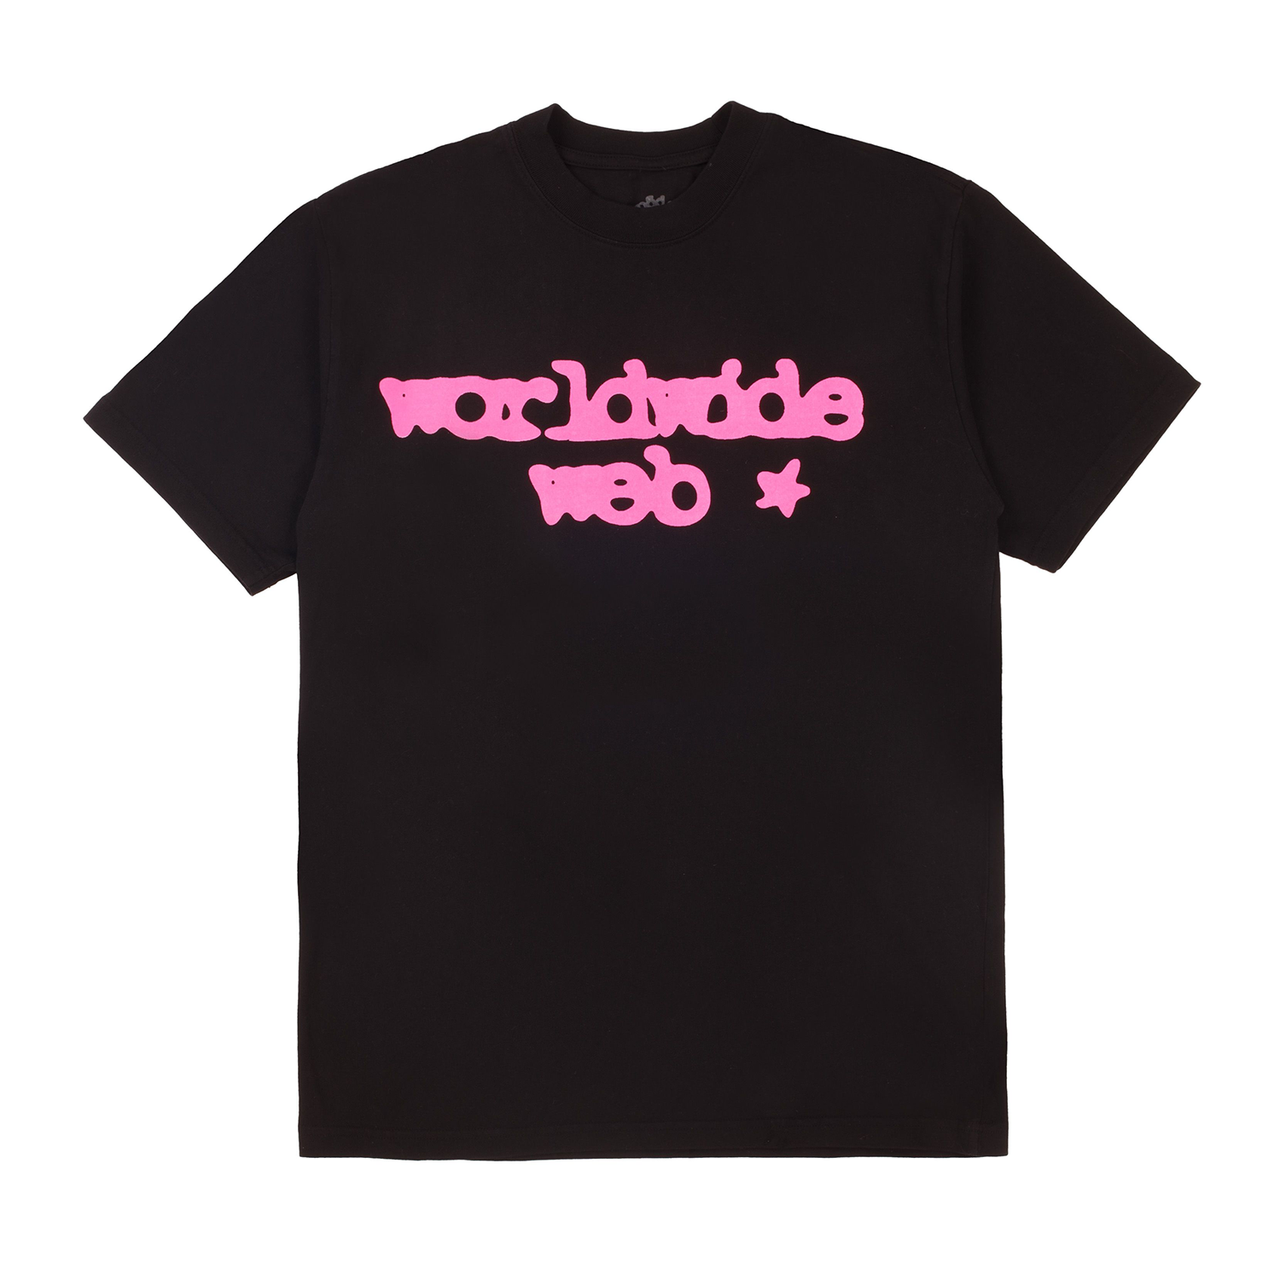 Sp5der Worldwide Worldwide Web Tee Black